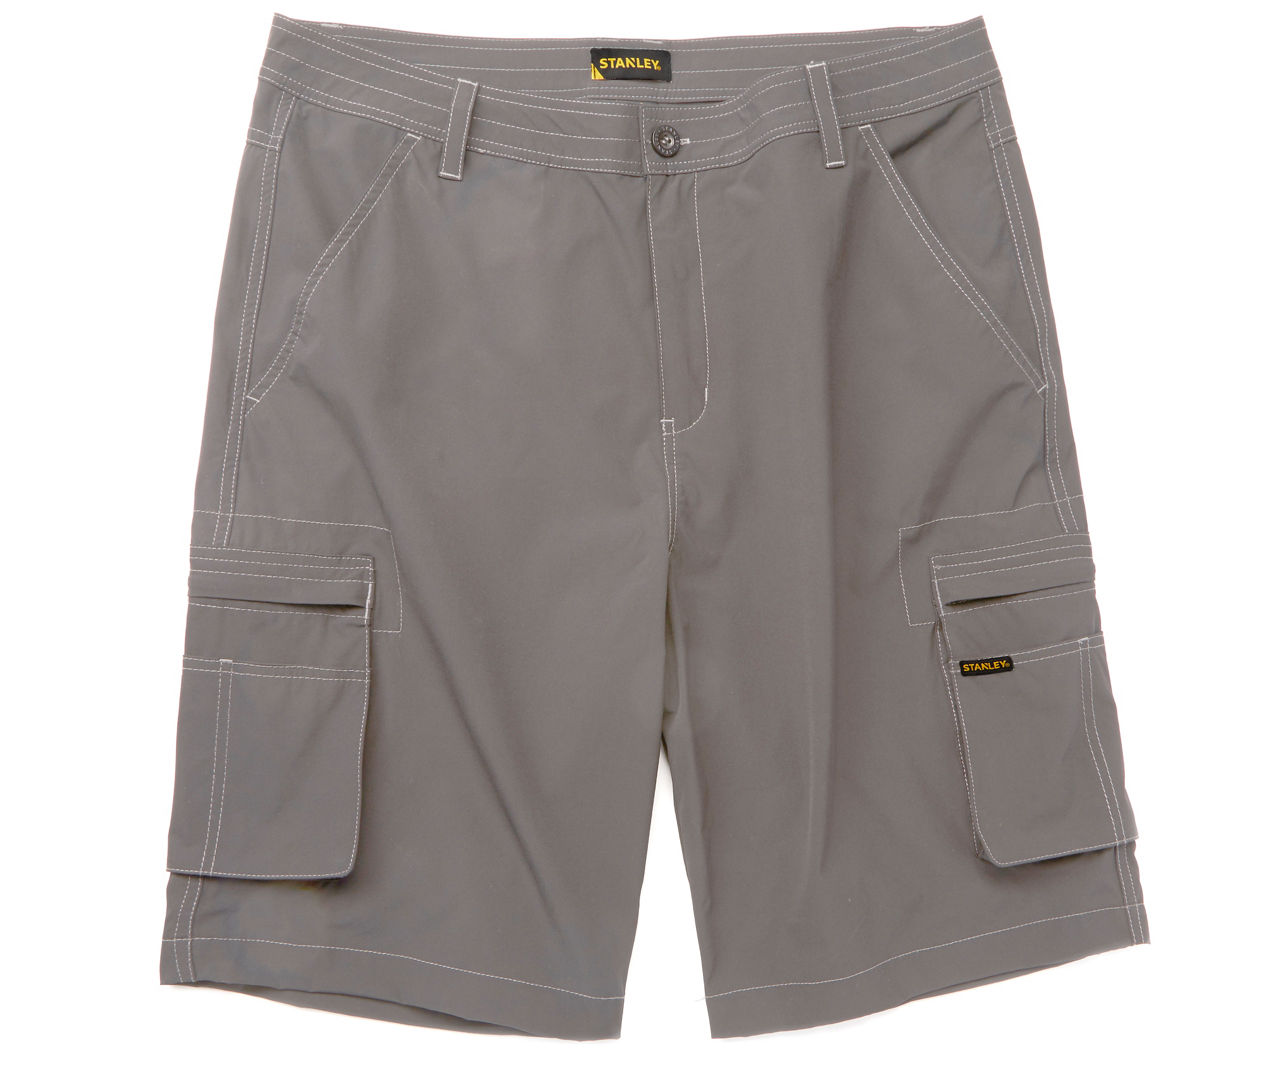 Stanley Men's 38 Light Gray Cargo Stretch Shorts